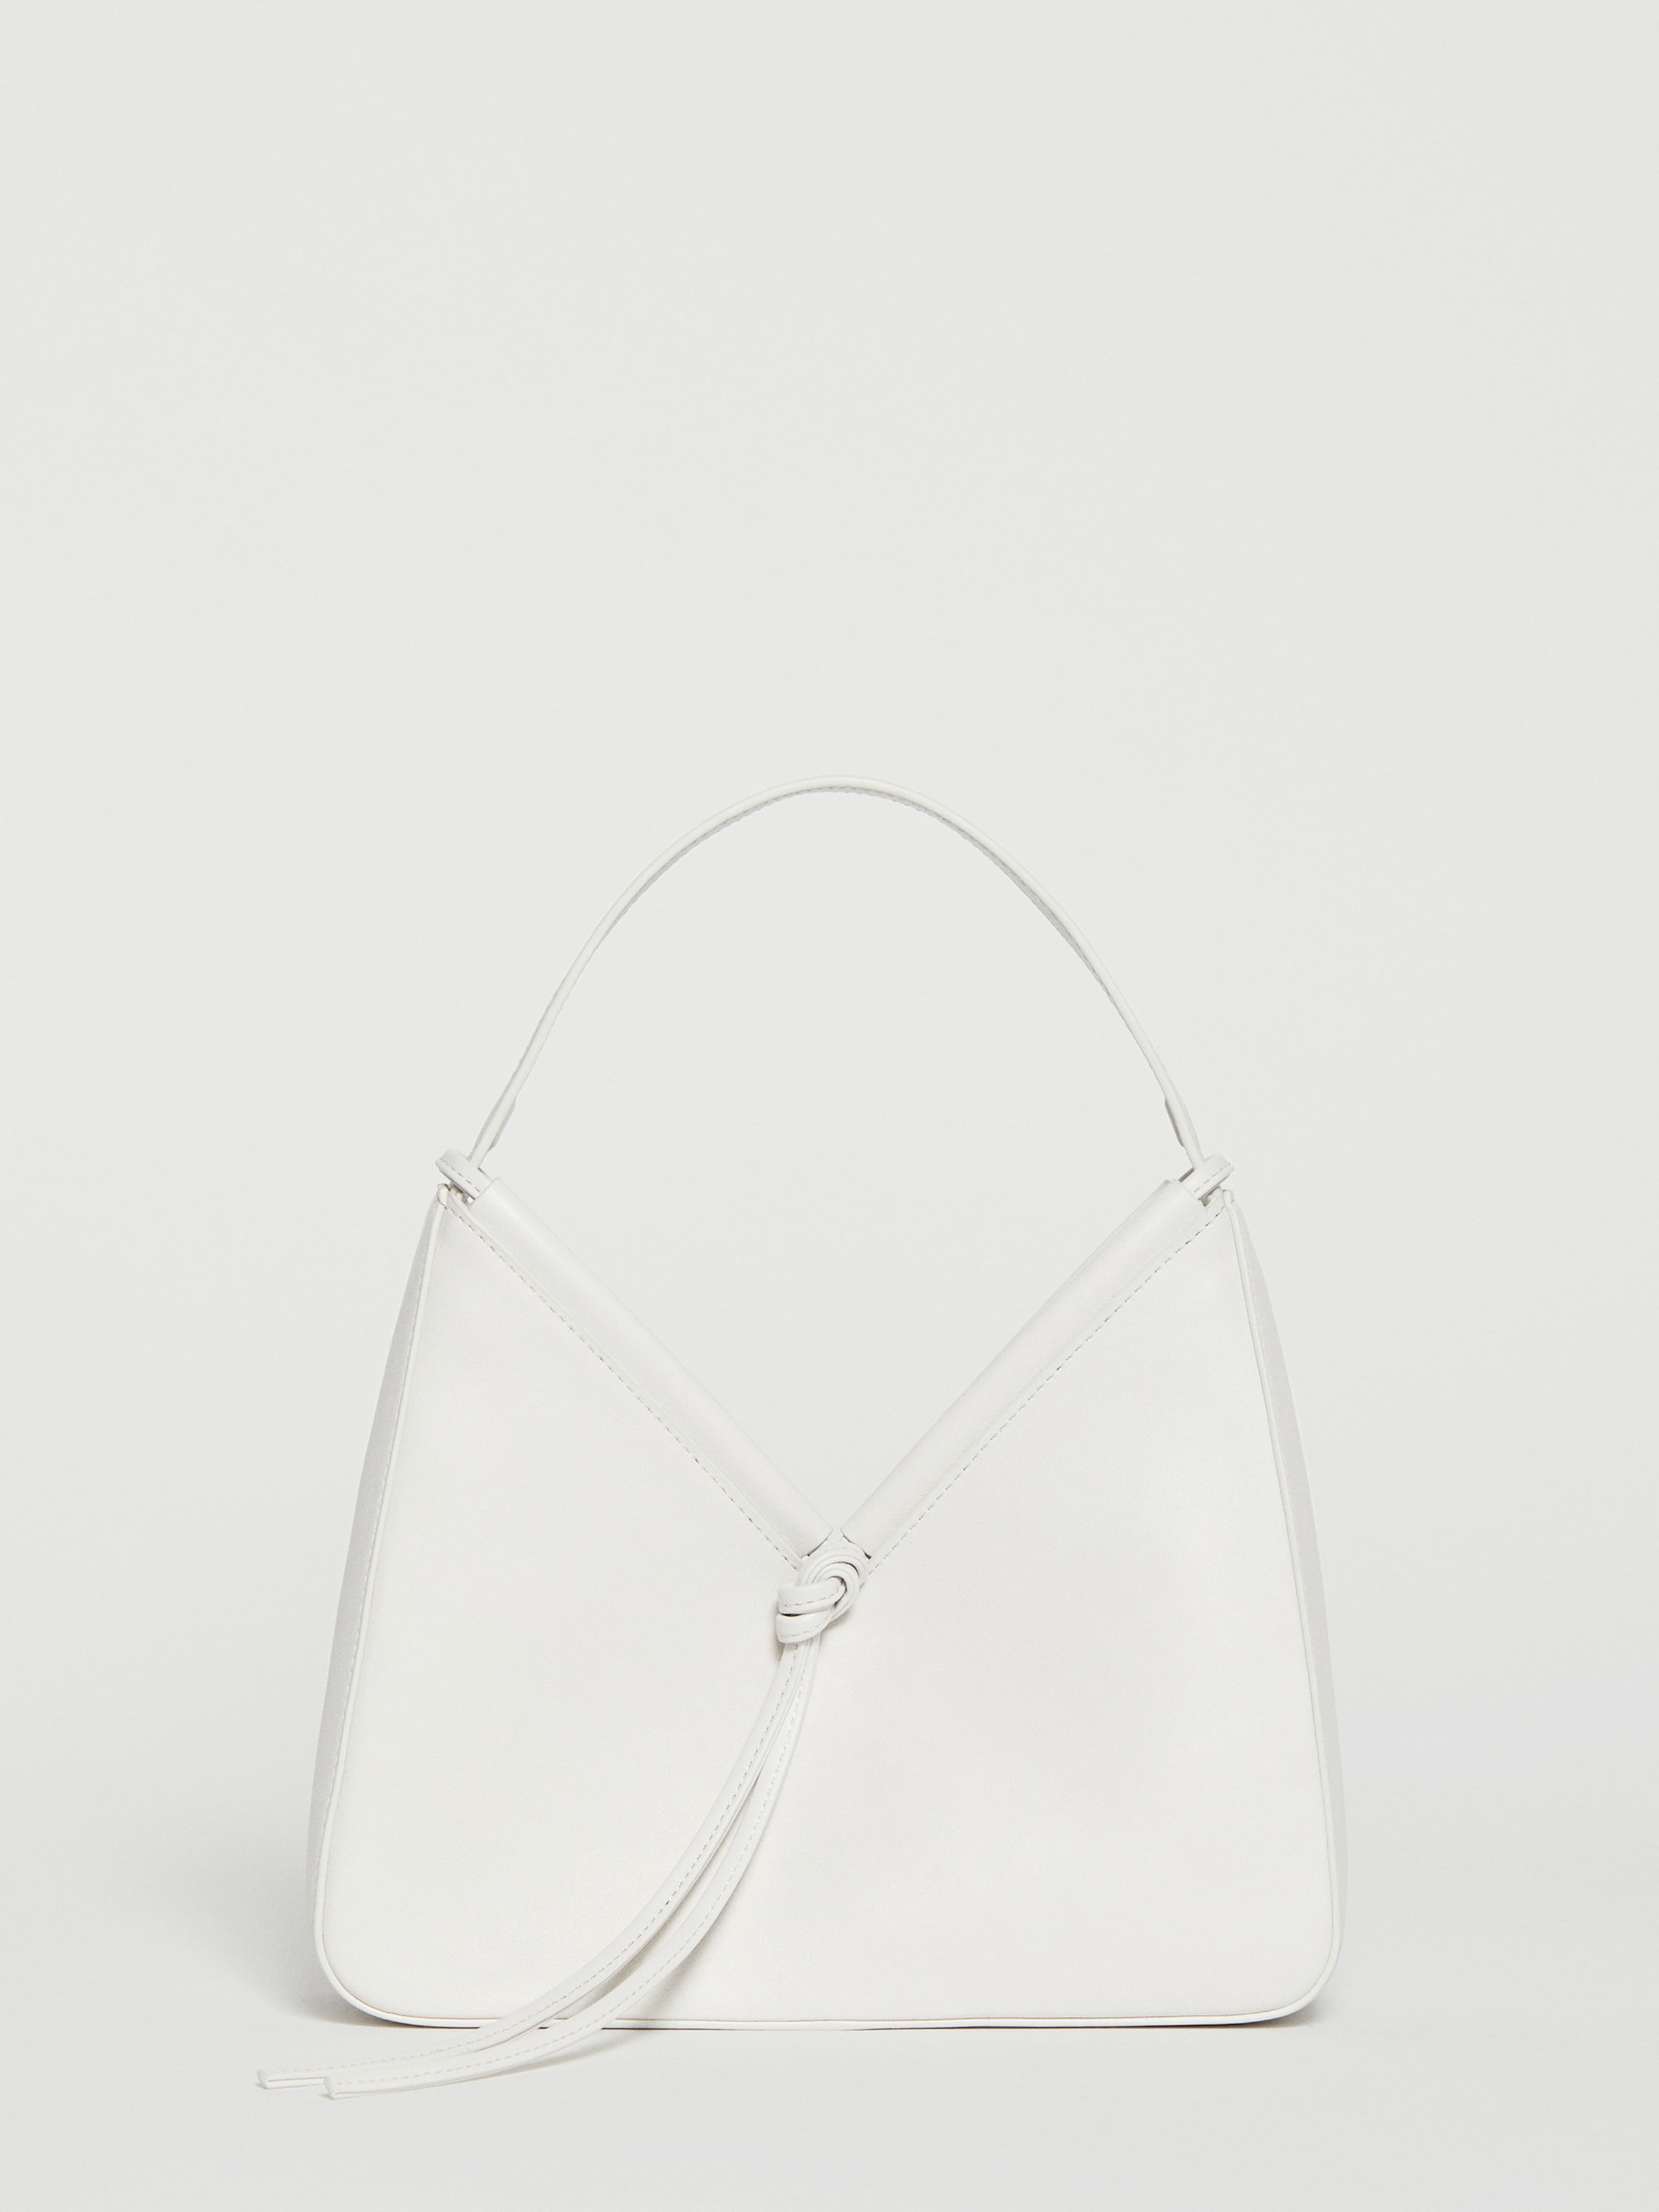 Reformation Medium Chiara Convertible Bag In White